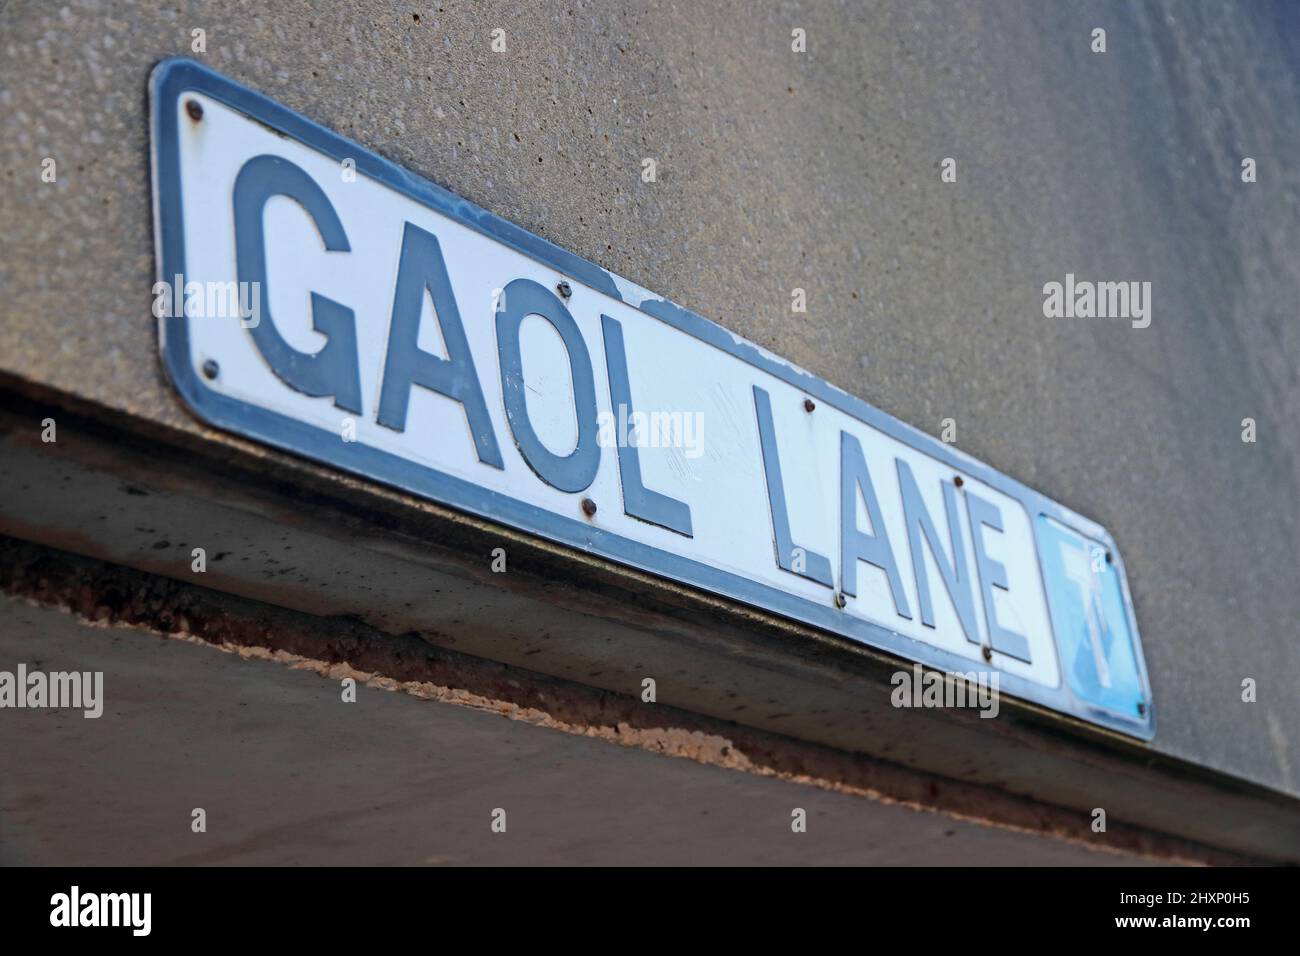 Gaol Lane sign, Halifax Stock Photo